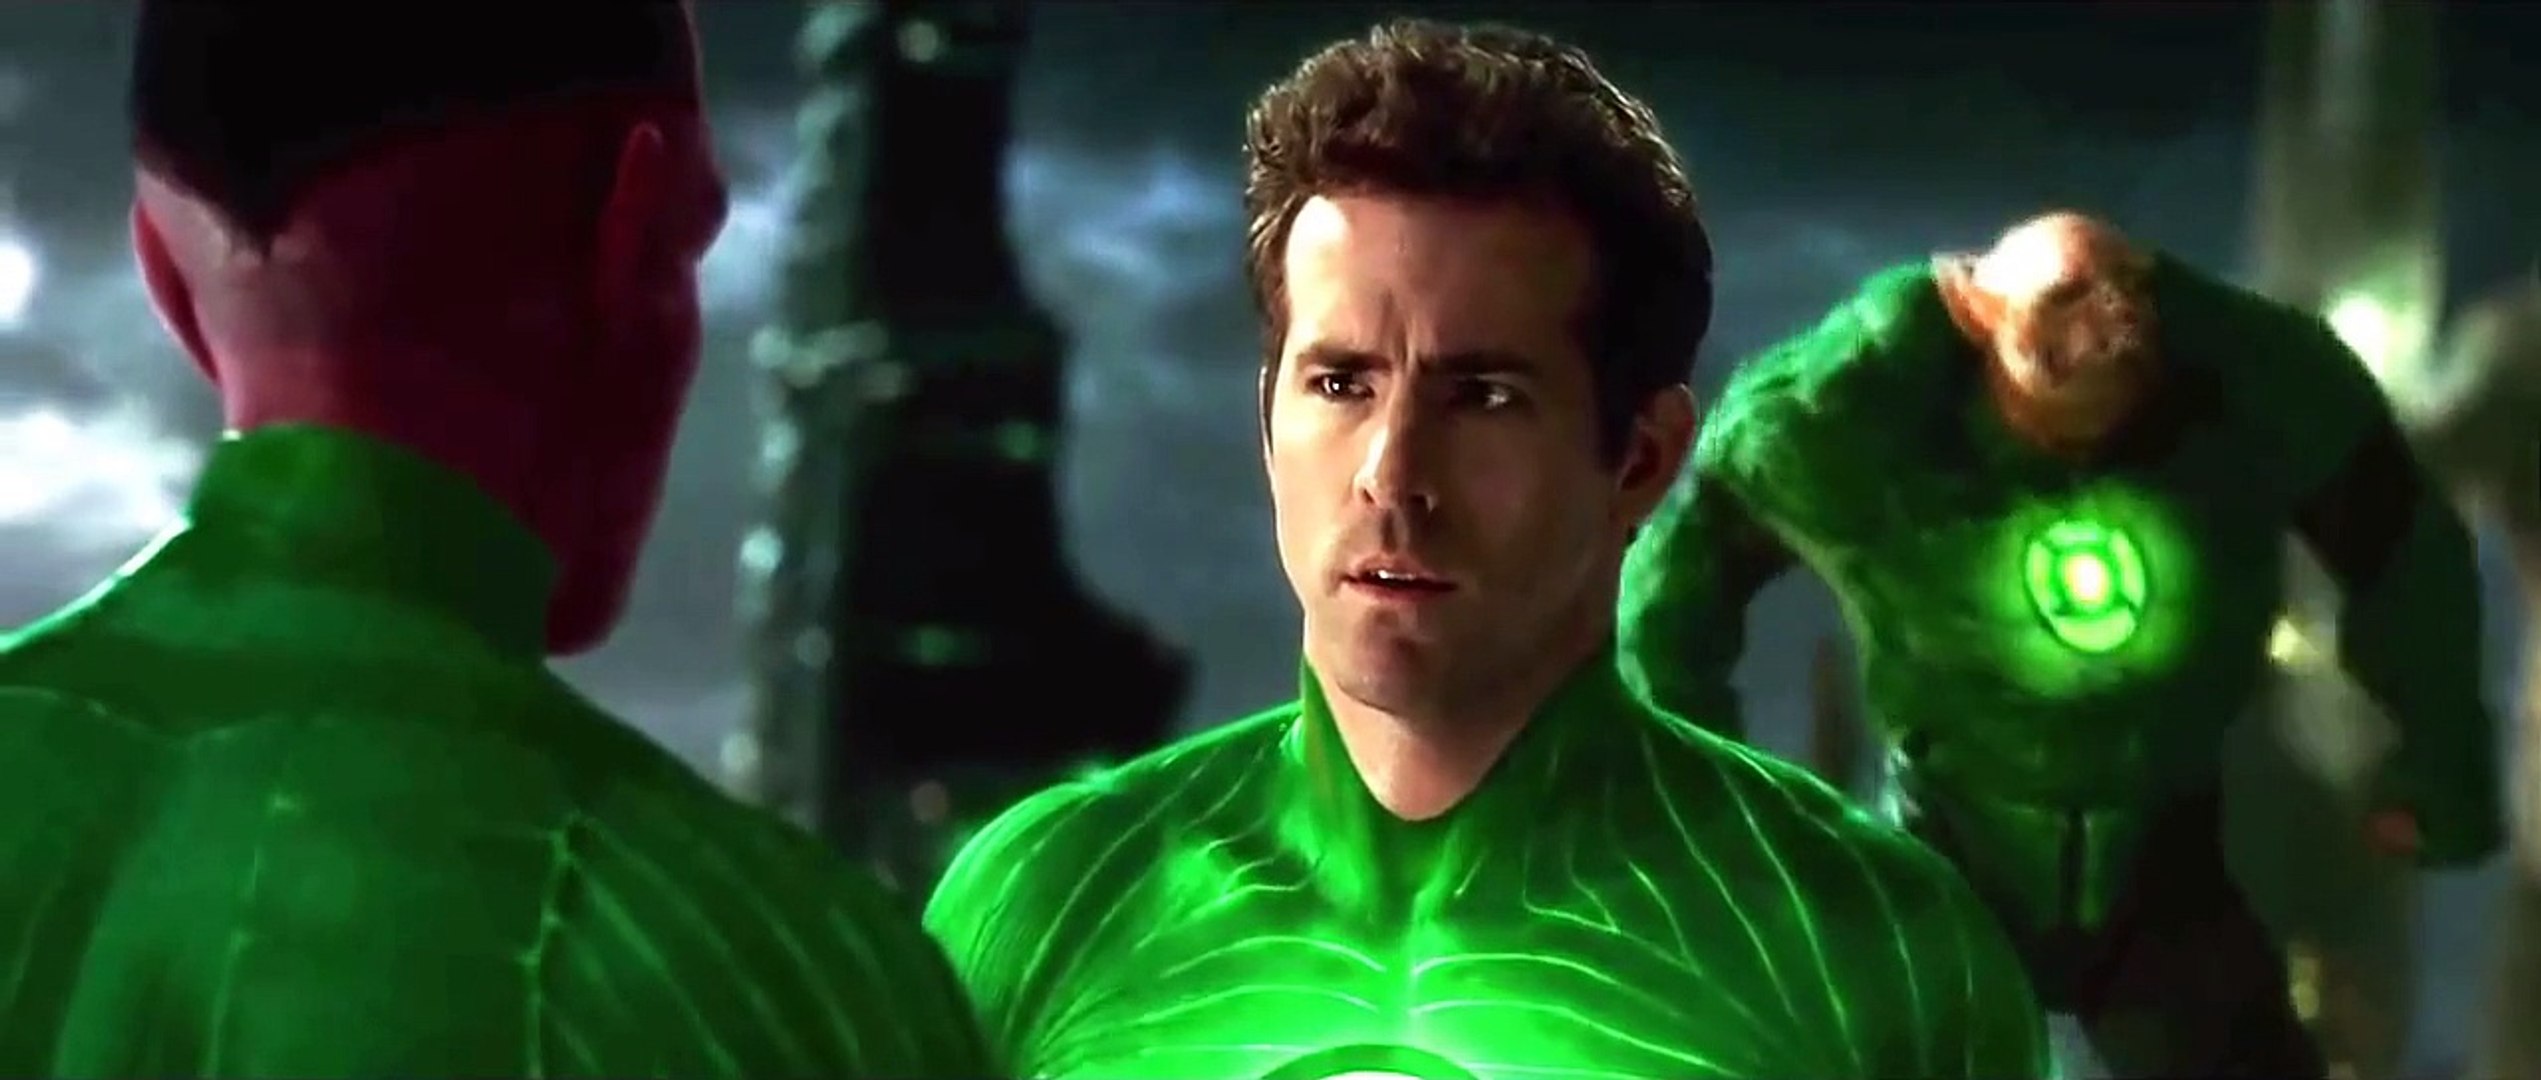 Green Lantern - Sinestro vs Hal Jordan - Vidéo Dailymotion